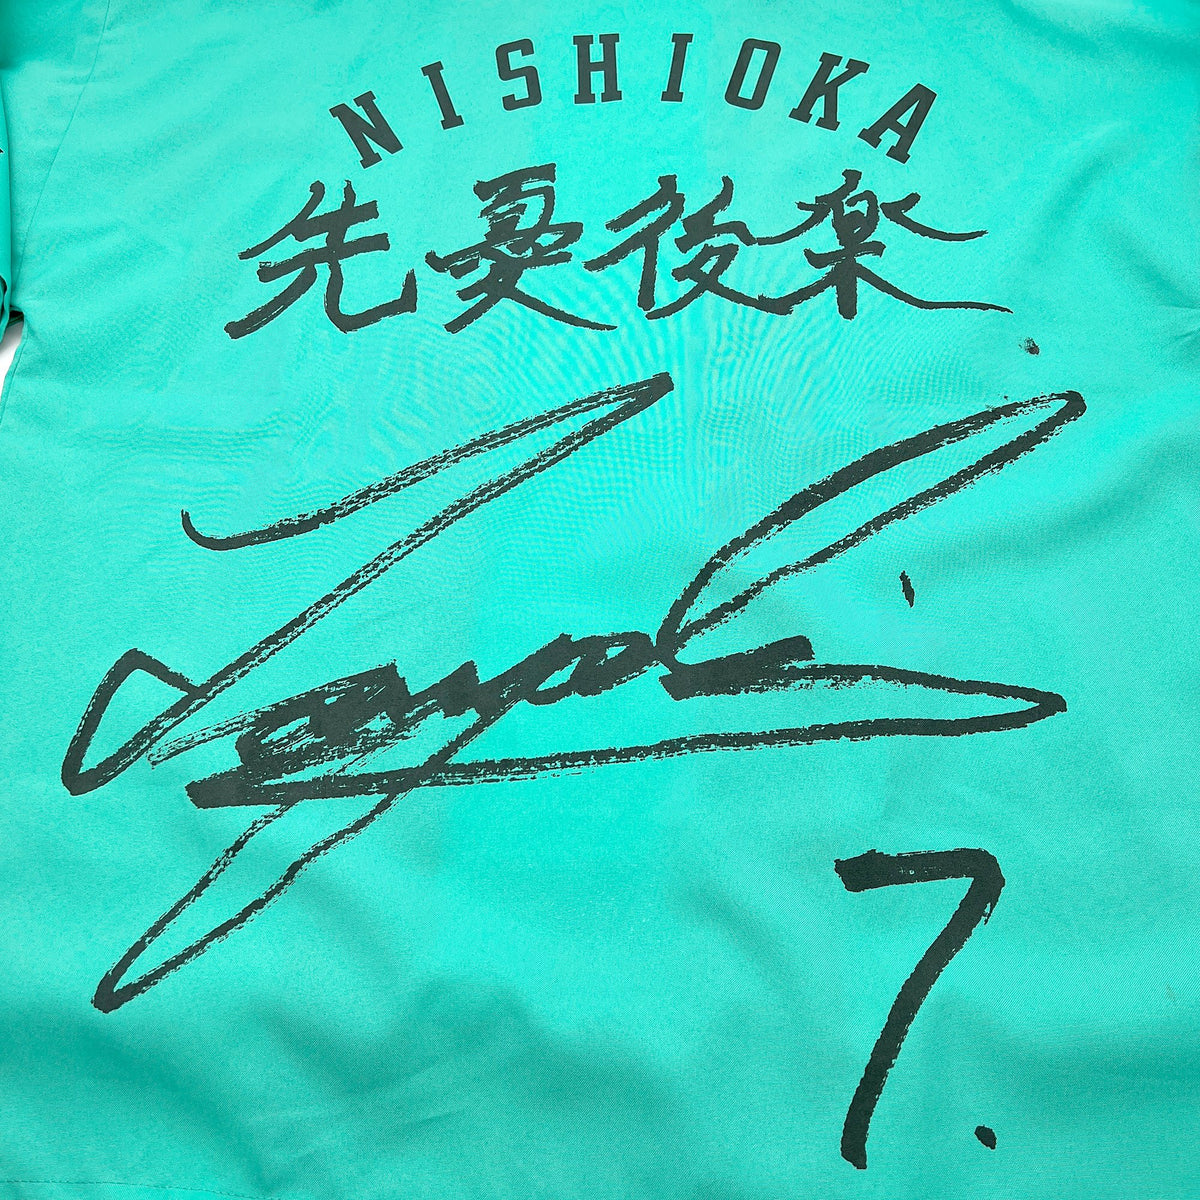 Retro Japanese Baseball Hanshin Tigers Matsuri Happi Coat Tsuyoshi Nishioka - Sugoi JDM